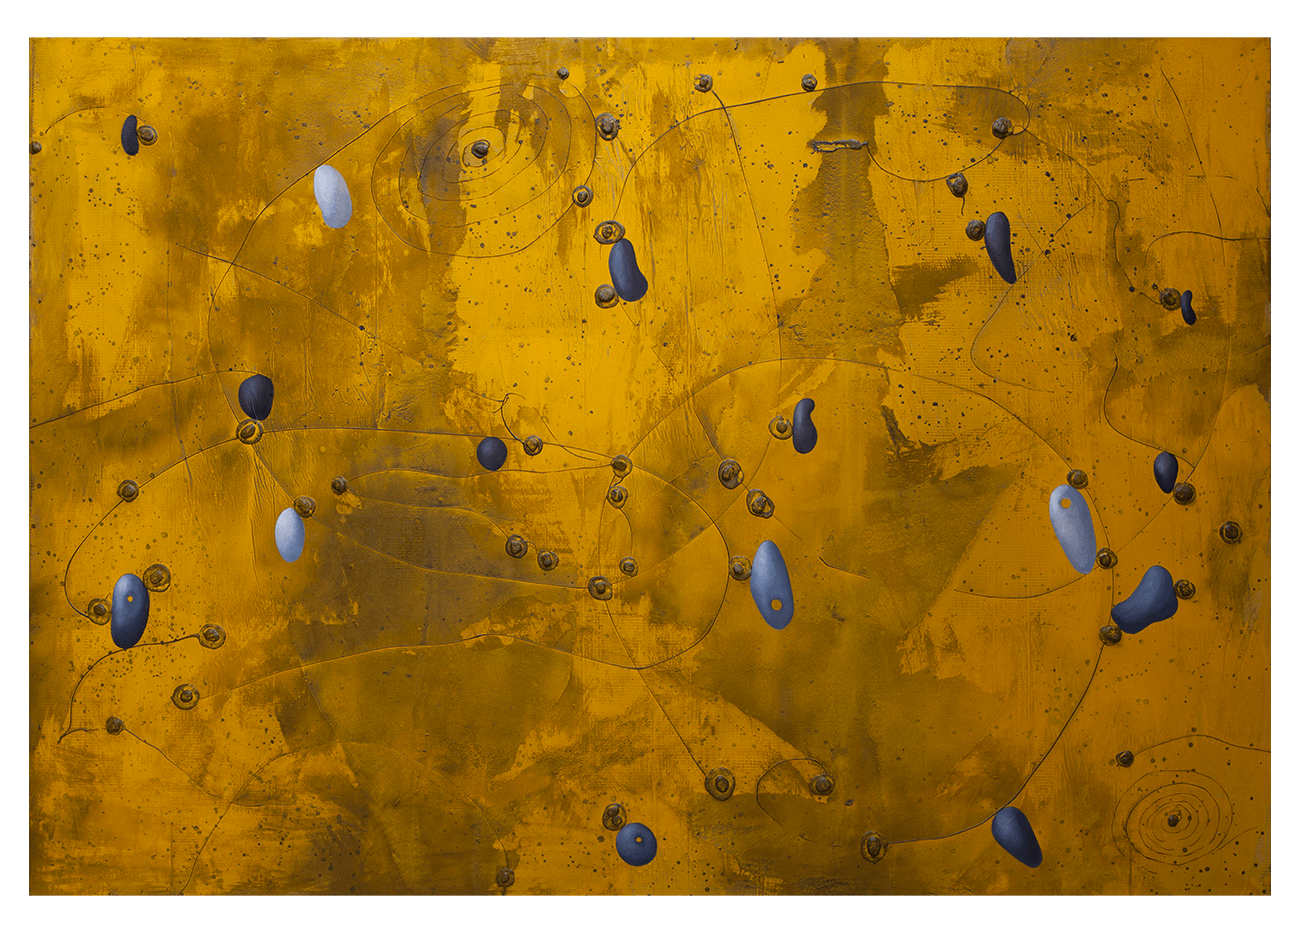 Chaosmos-2013-_251x360cm-peinture_sur_toile_